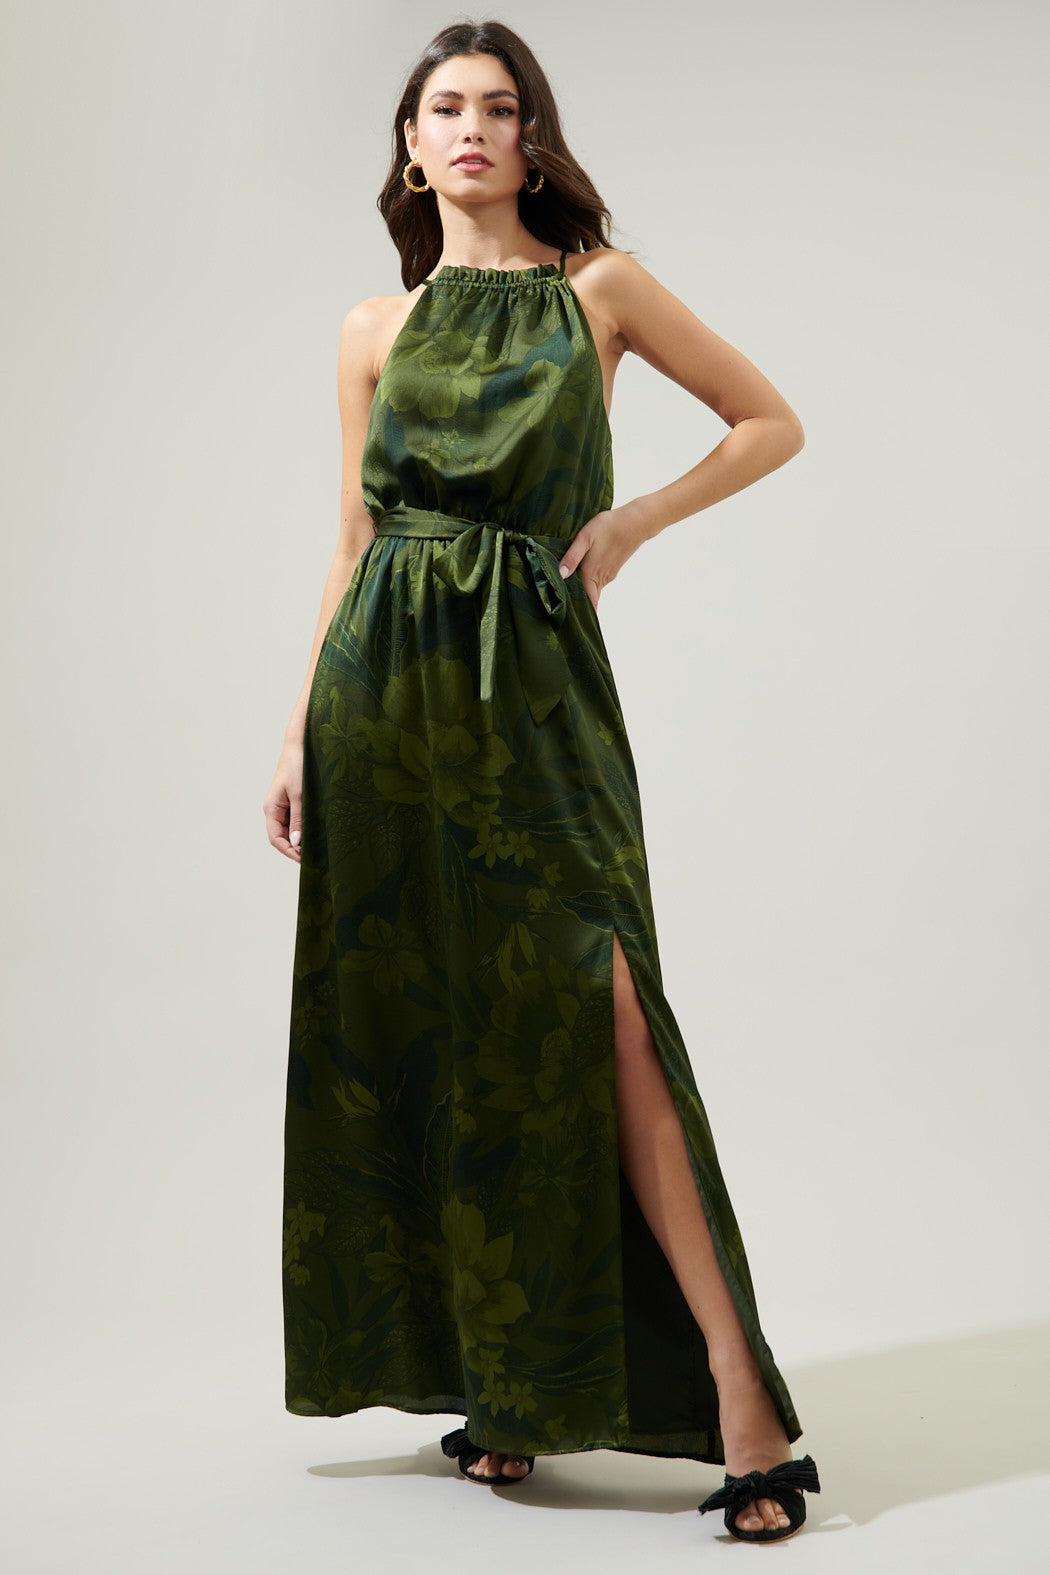 Ivy Halter Dress